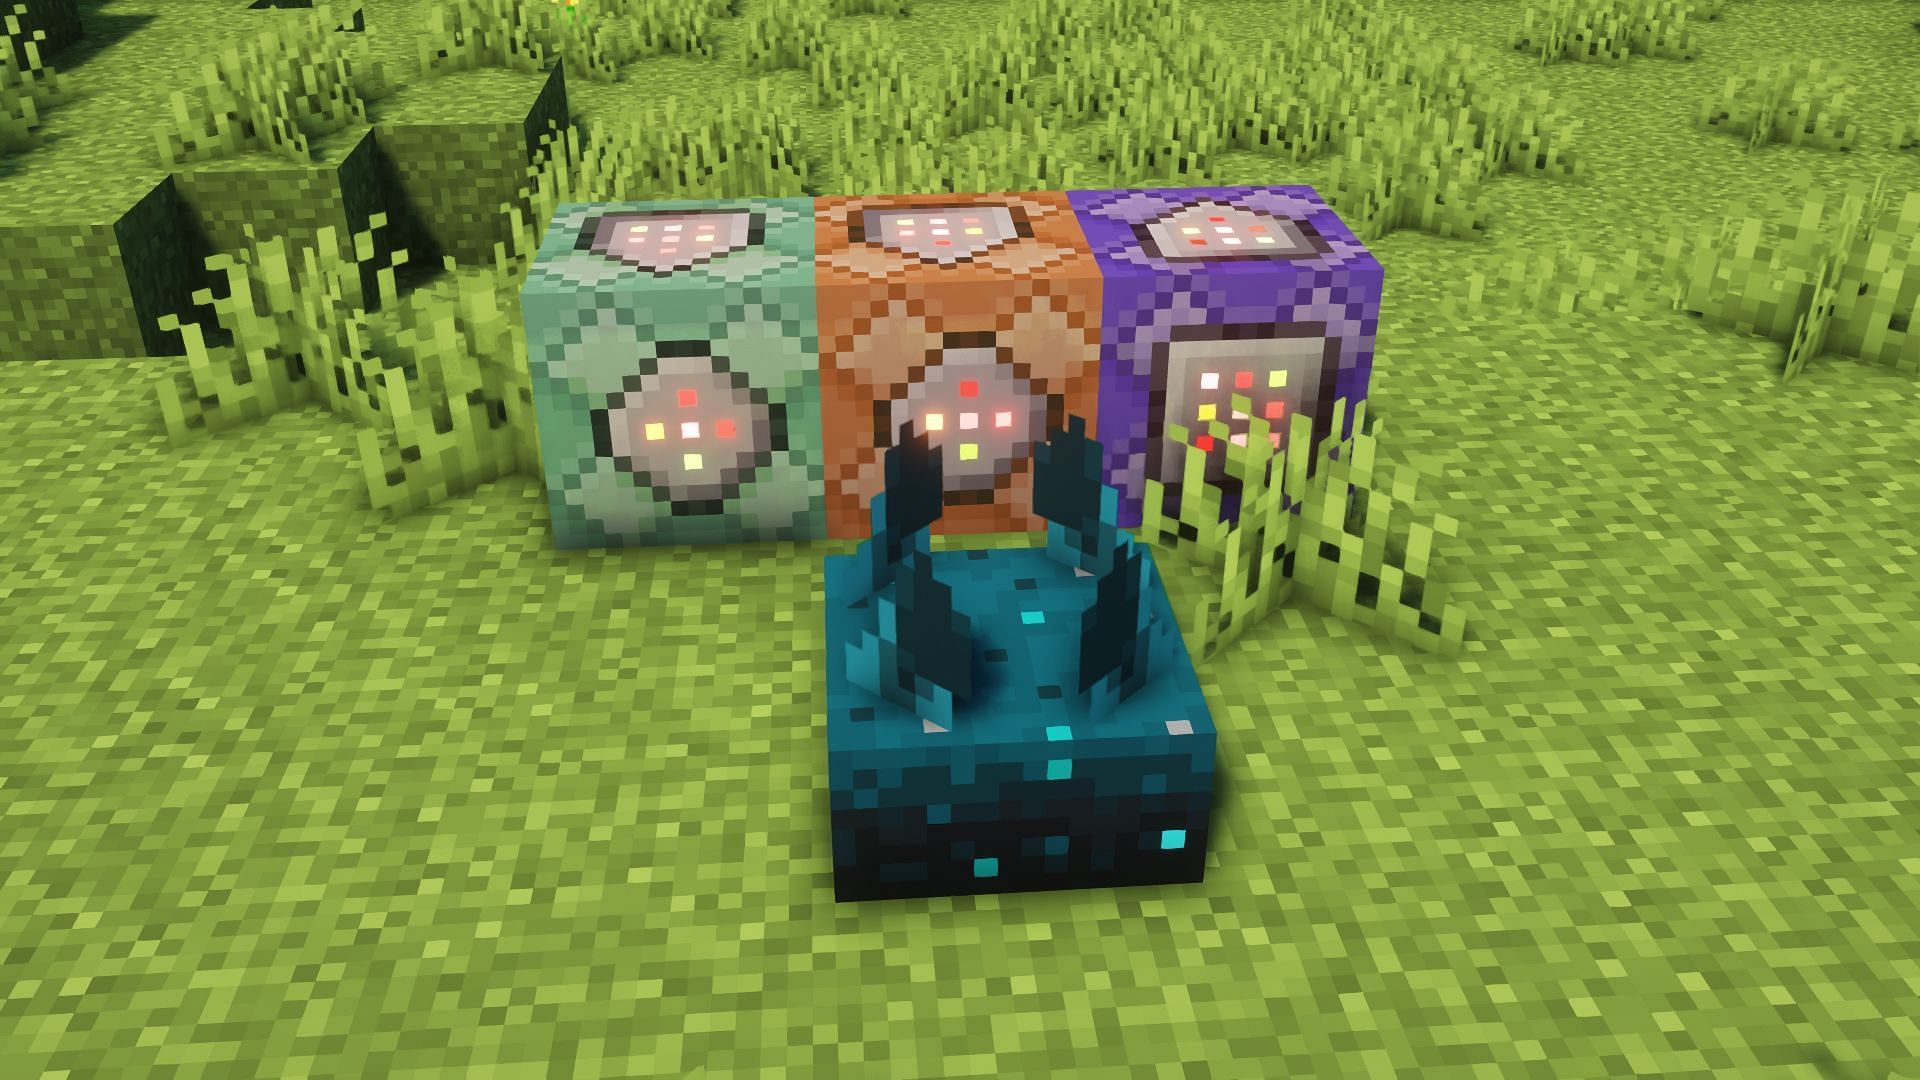 Unobtainable blocks (Image via Minecraft)